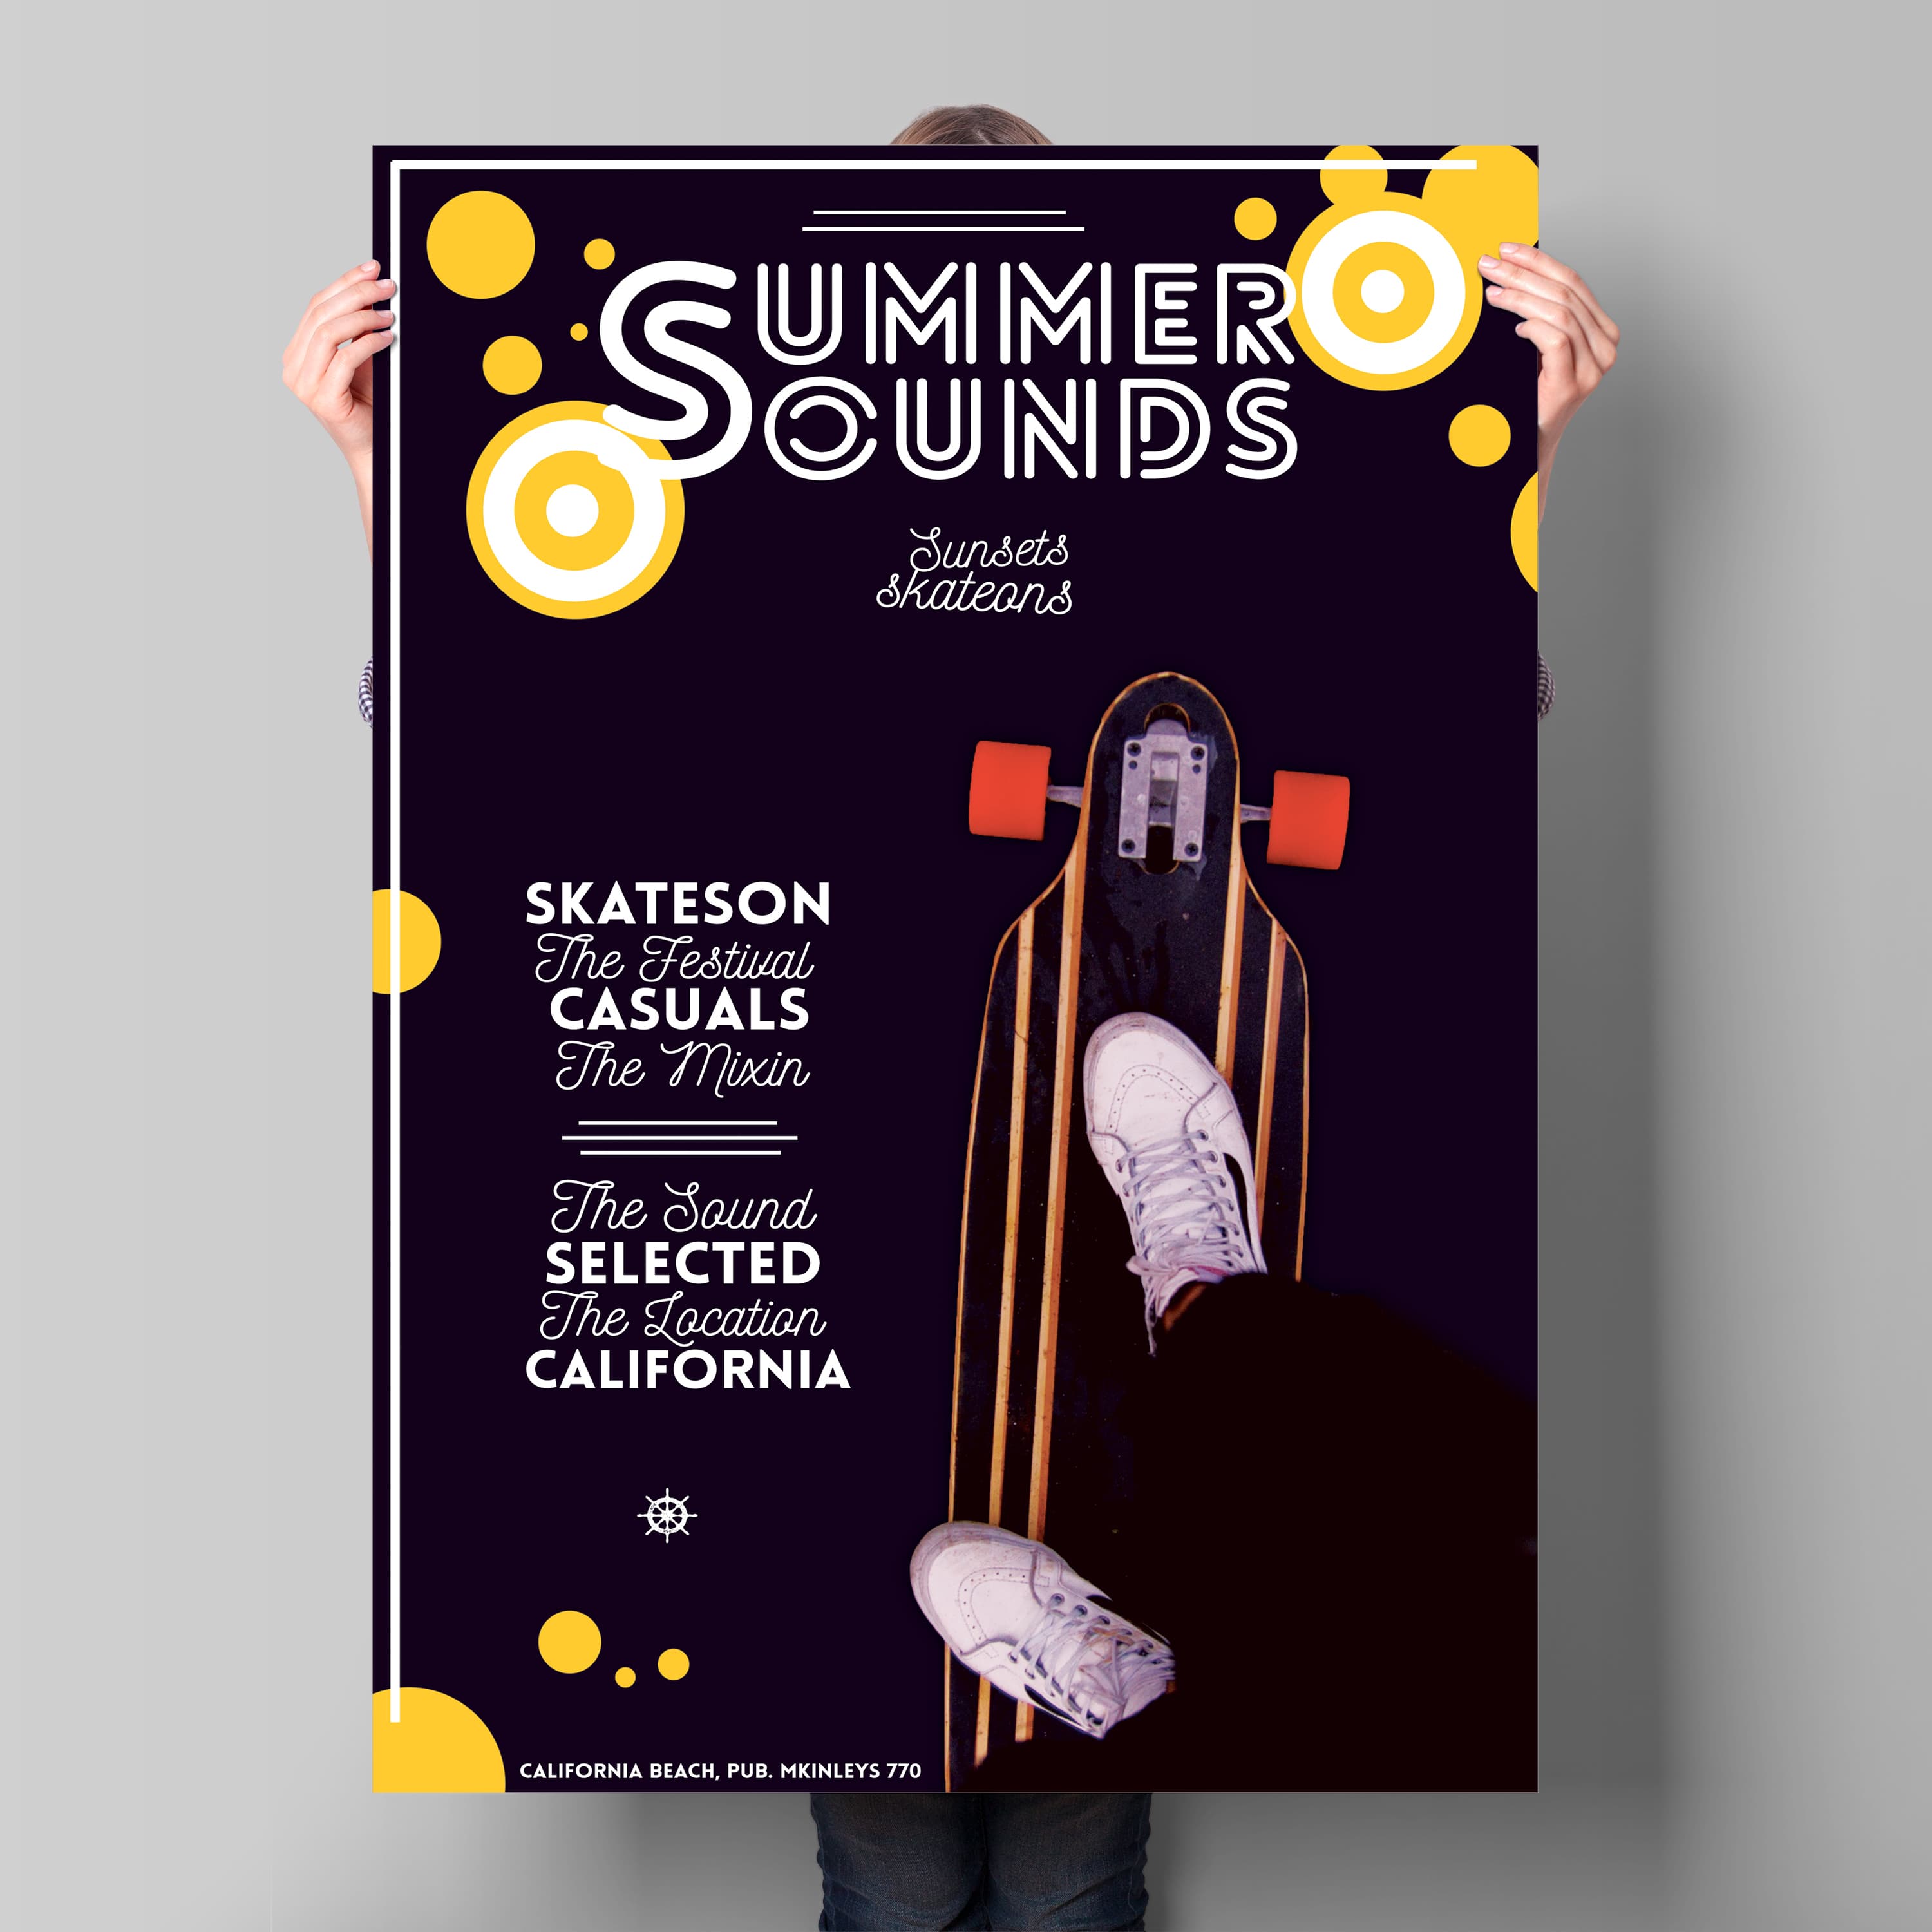 summerboard-sounds-poster-min